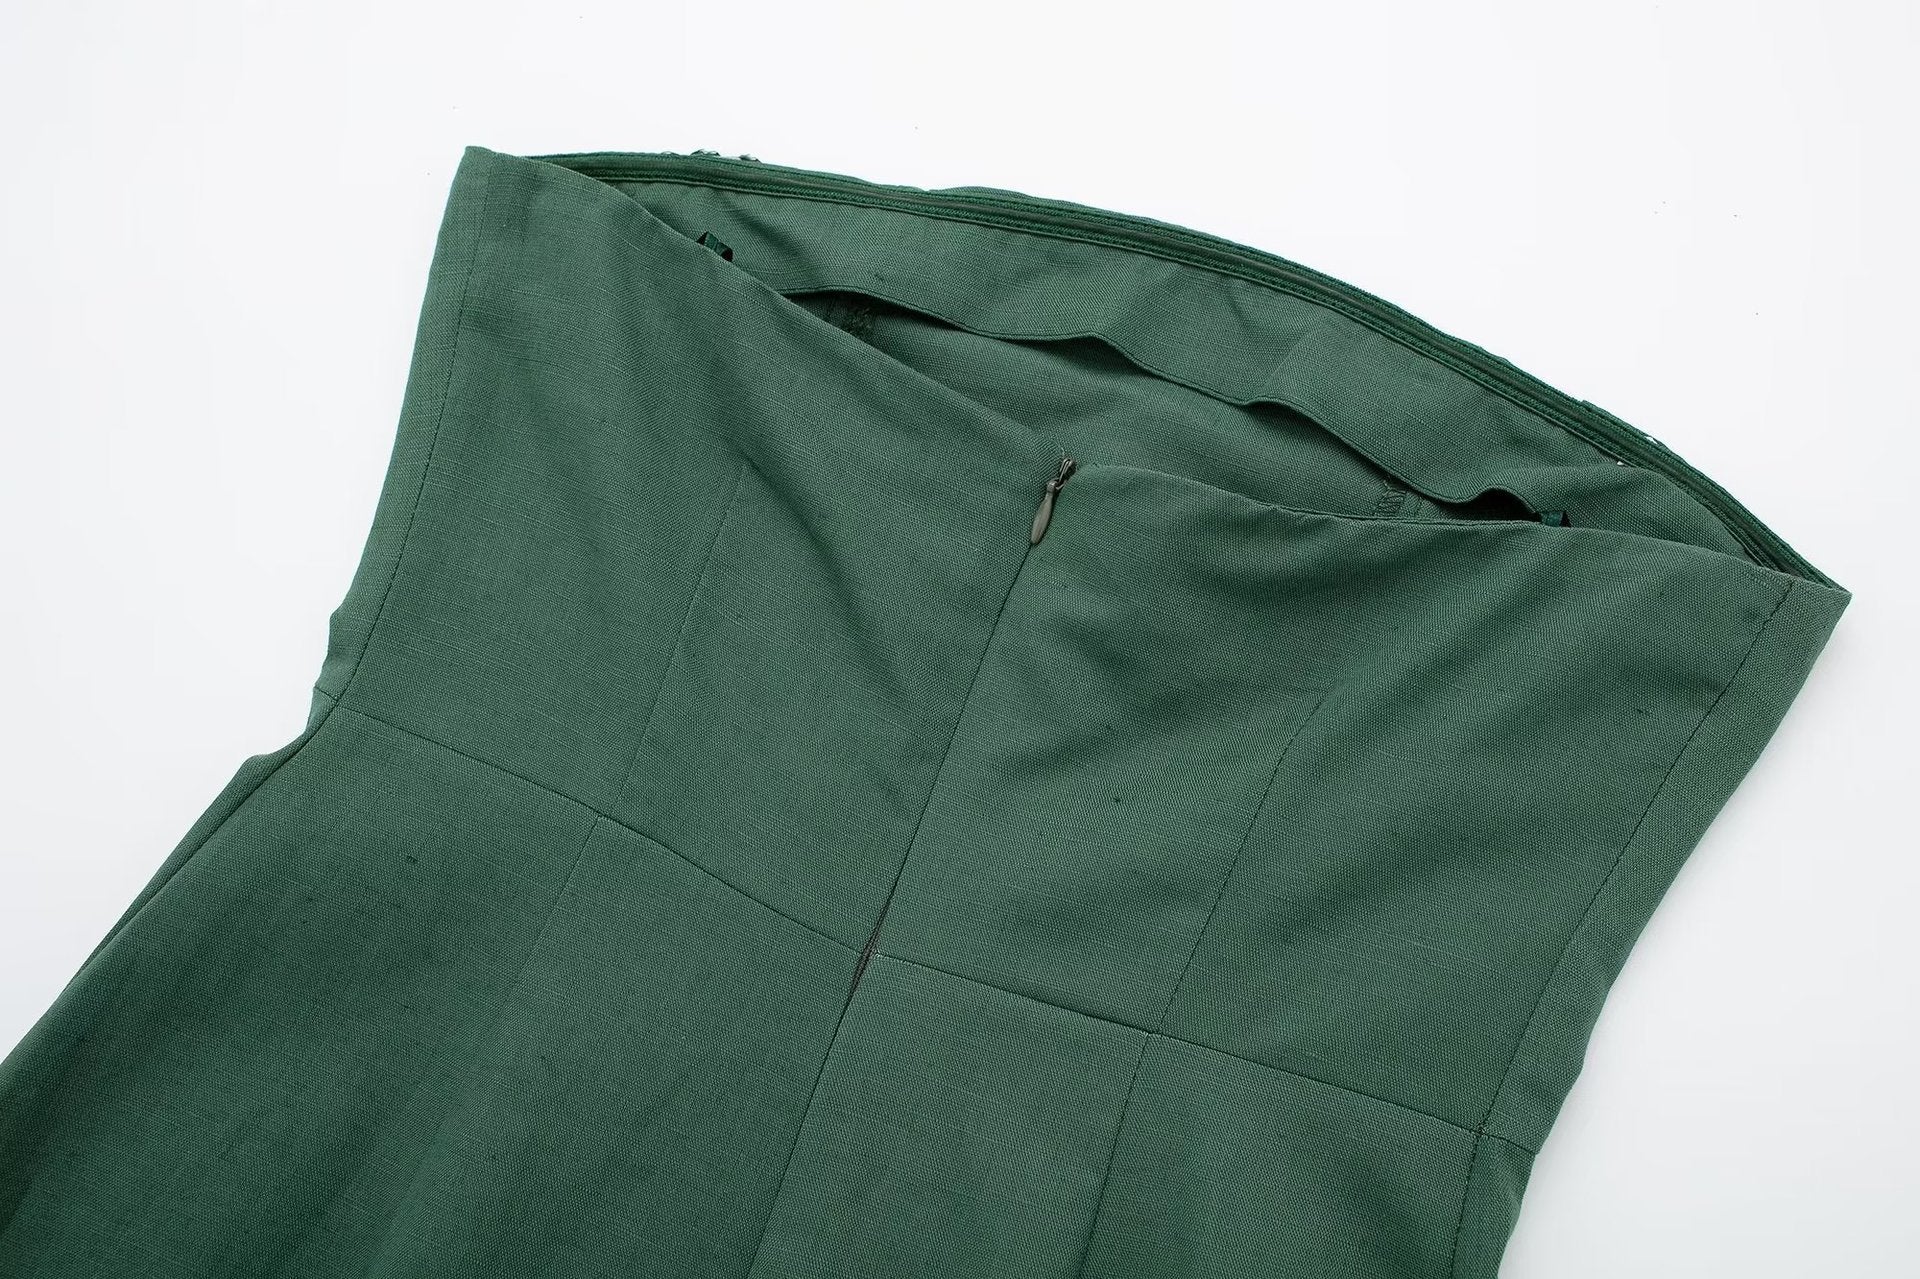 NTG Fad Dress Green Wrap Dress